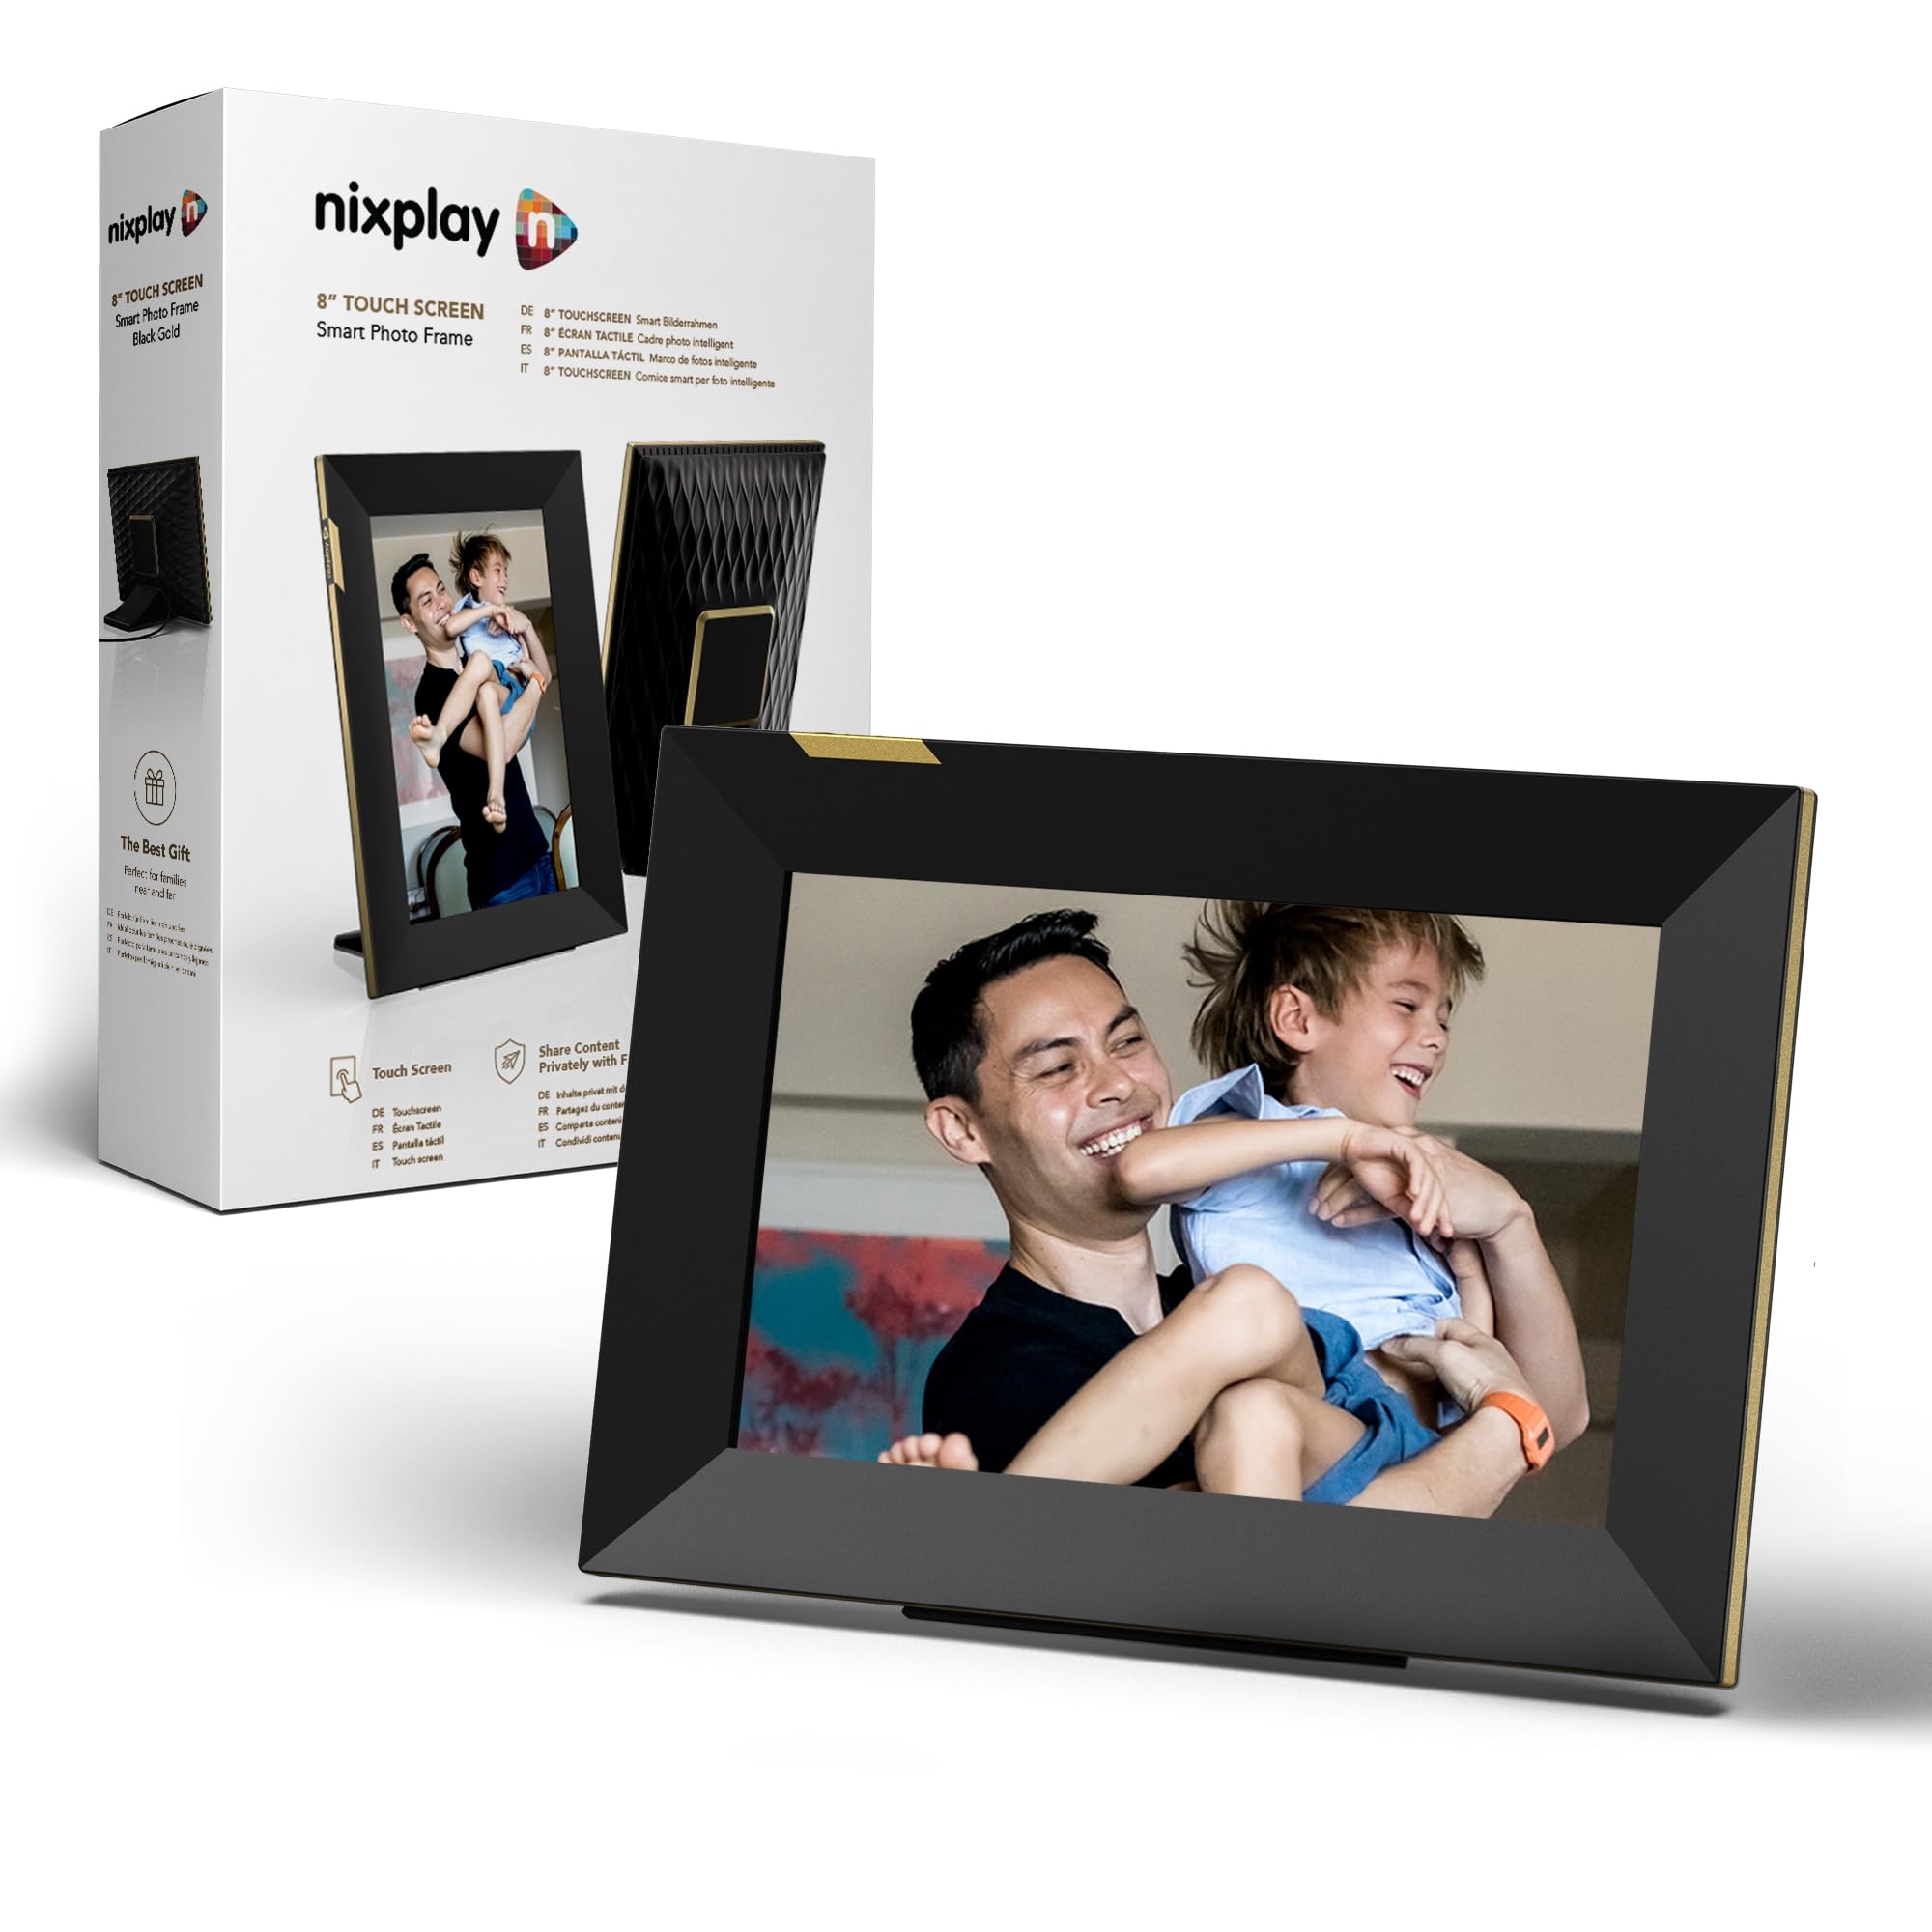 Nixplay 8 Zoll Touchscreen digitaler Bilderrahmen mit WiFi (W08K), Schwarz-Gold, Videoclips und Fotos sofort per E-Mail oder App teilen…